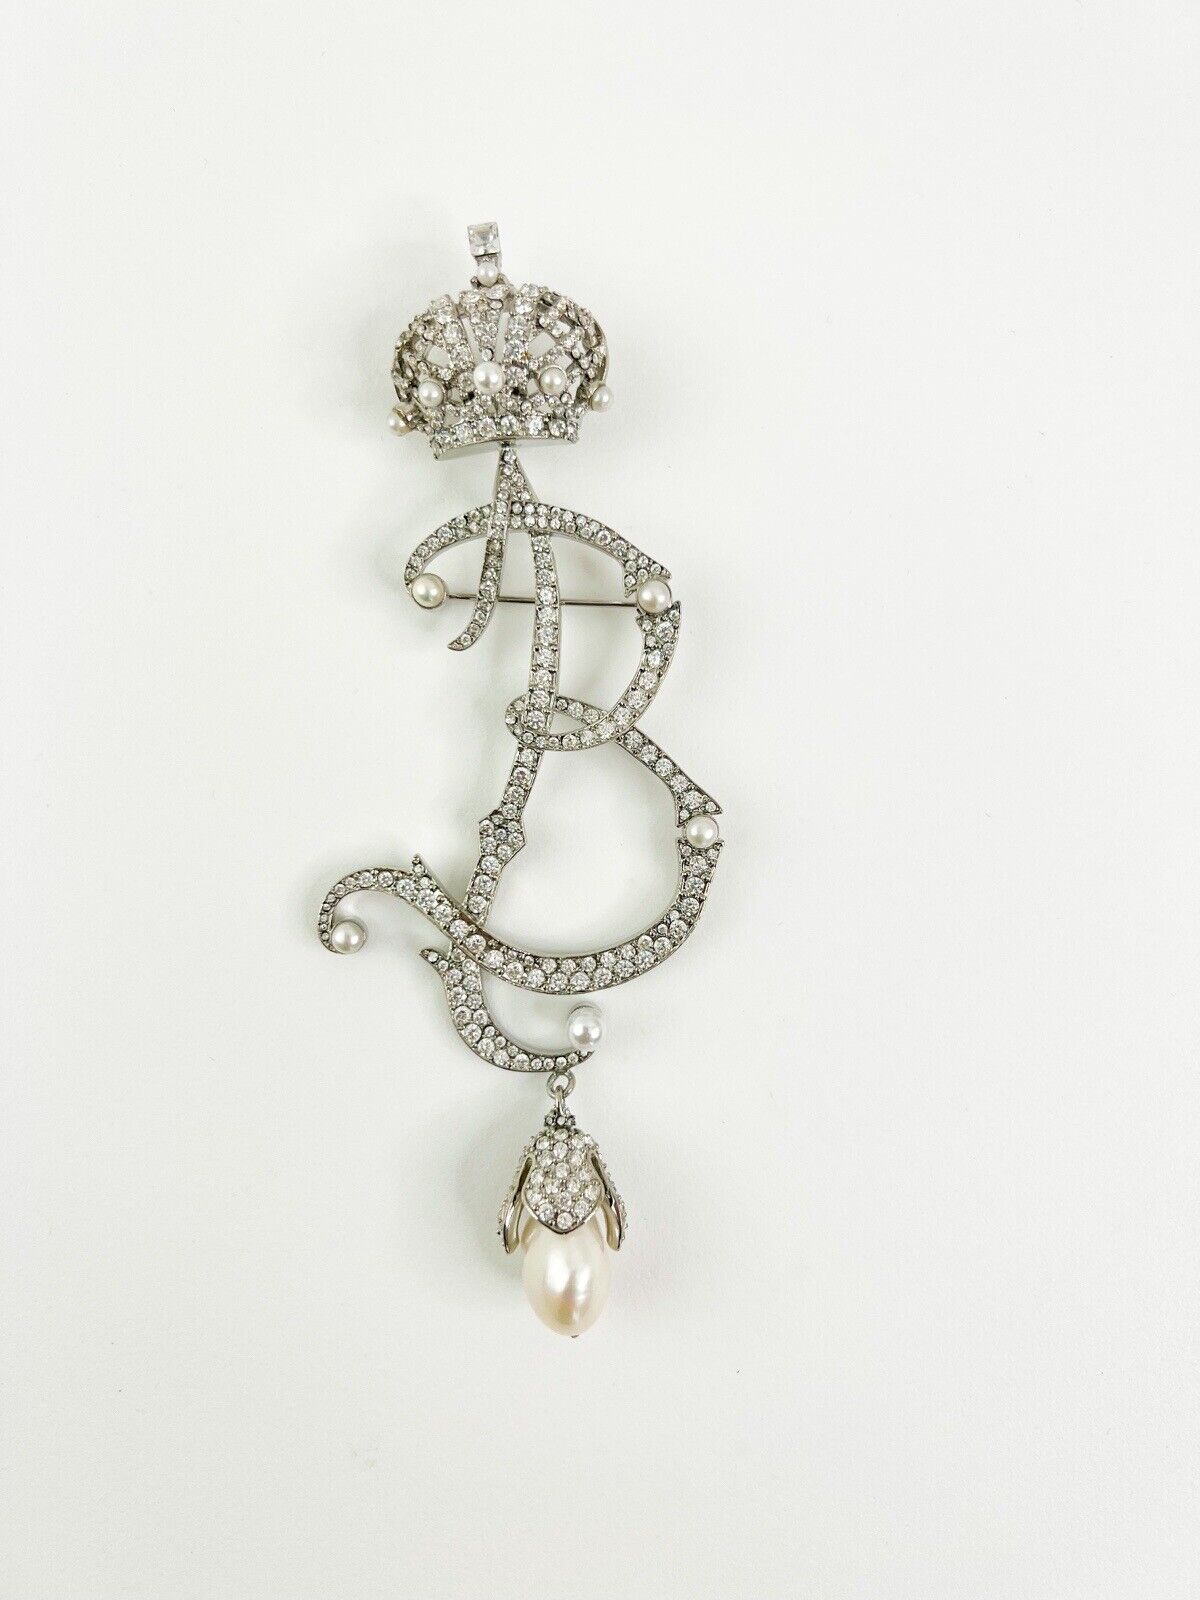 Vintage Balengiaga Brooch Pin, B Brooch Pin pearls, Bridal Jewelry, Balenciaga Palladium, Jewelry Brooch, Queen B ,Personalized Gifts